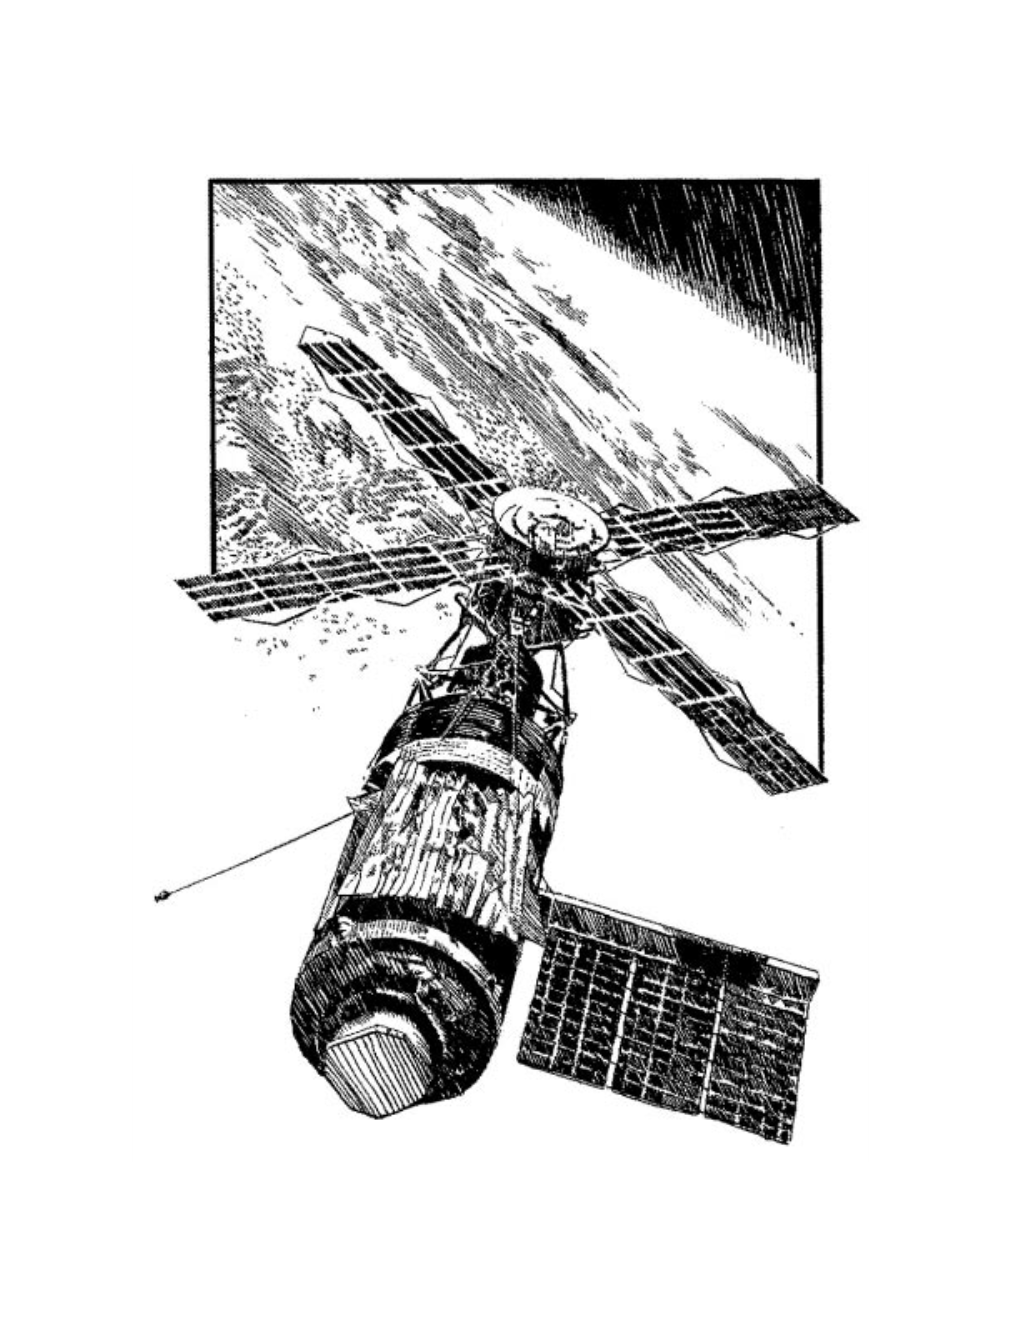 CHAPTER 11: Skylab to Shuttle